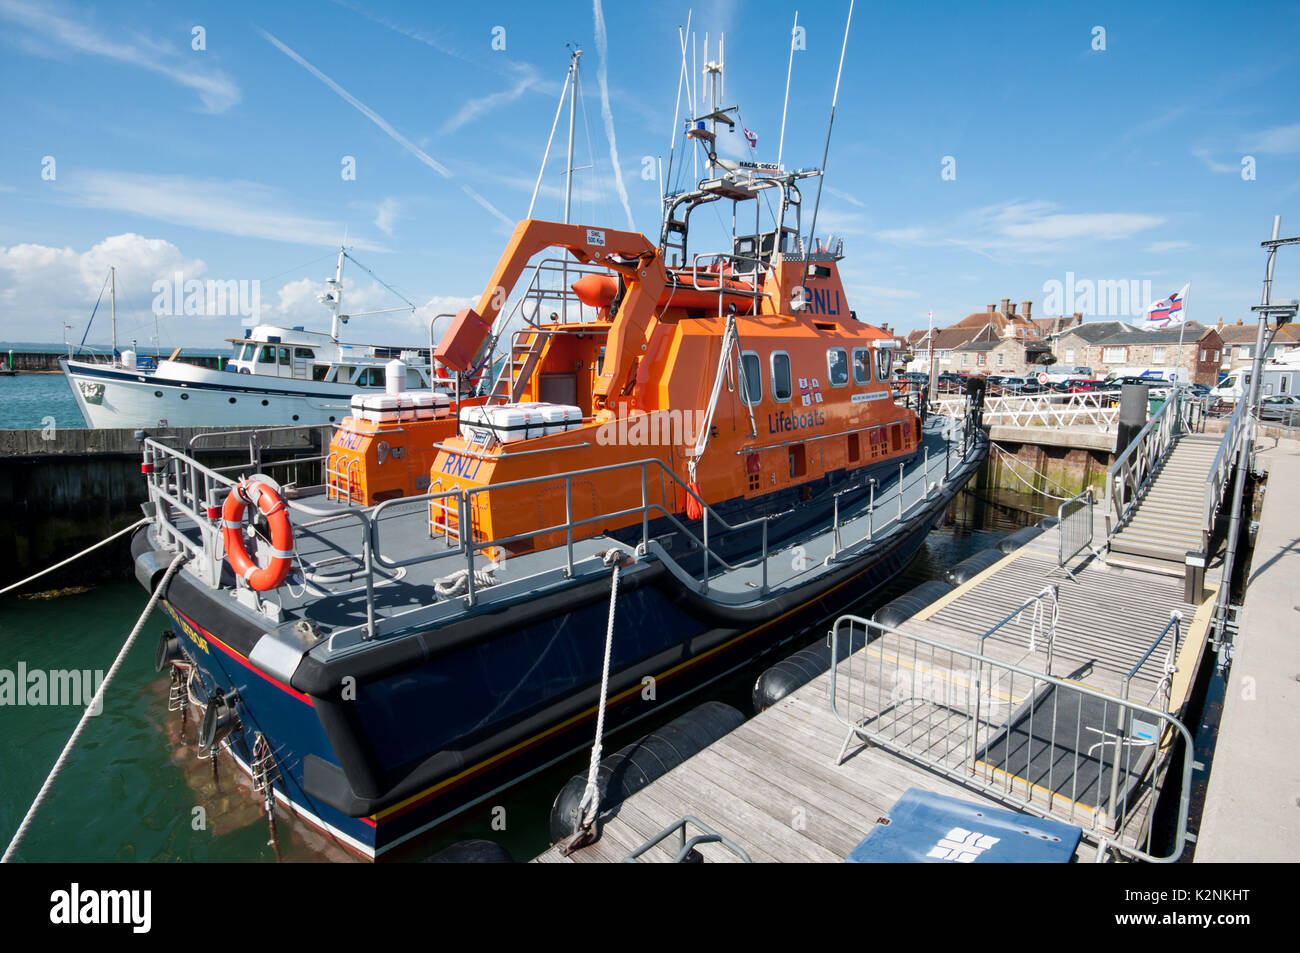 RNLI Lifeboat at Yarmouth, Isle of Wight, United Kingdom Stock Photo